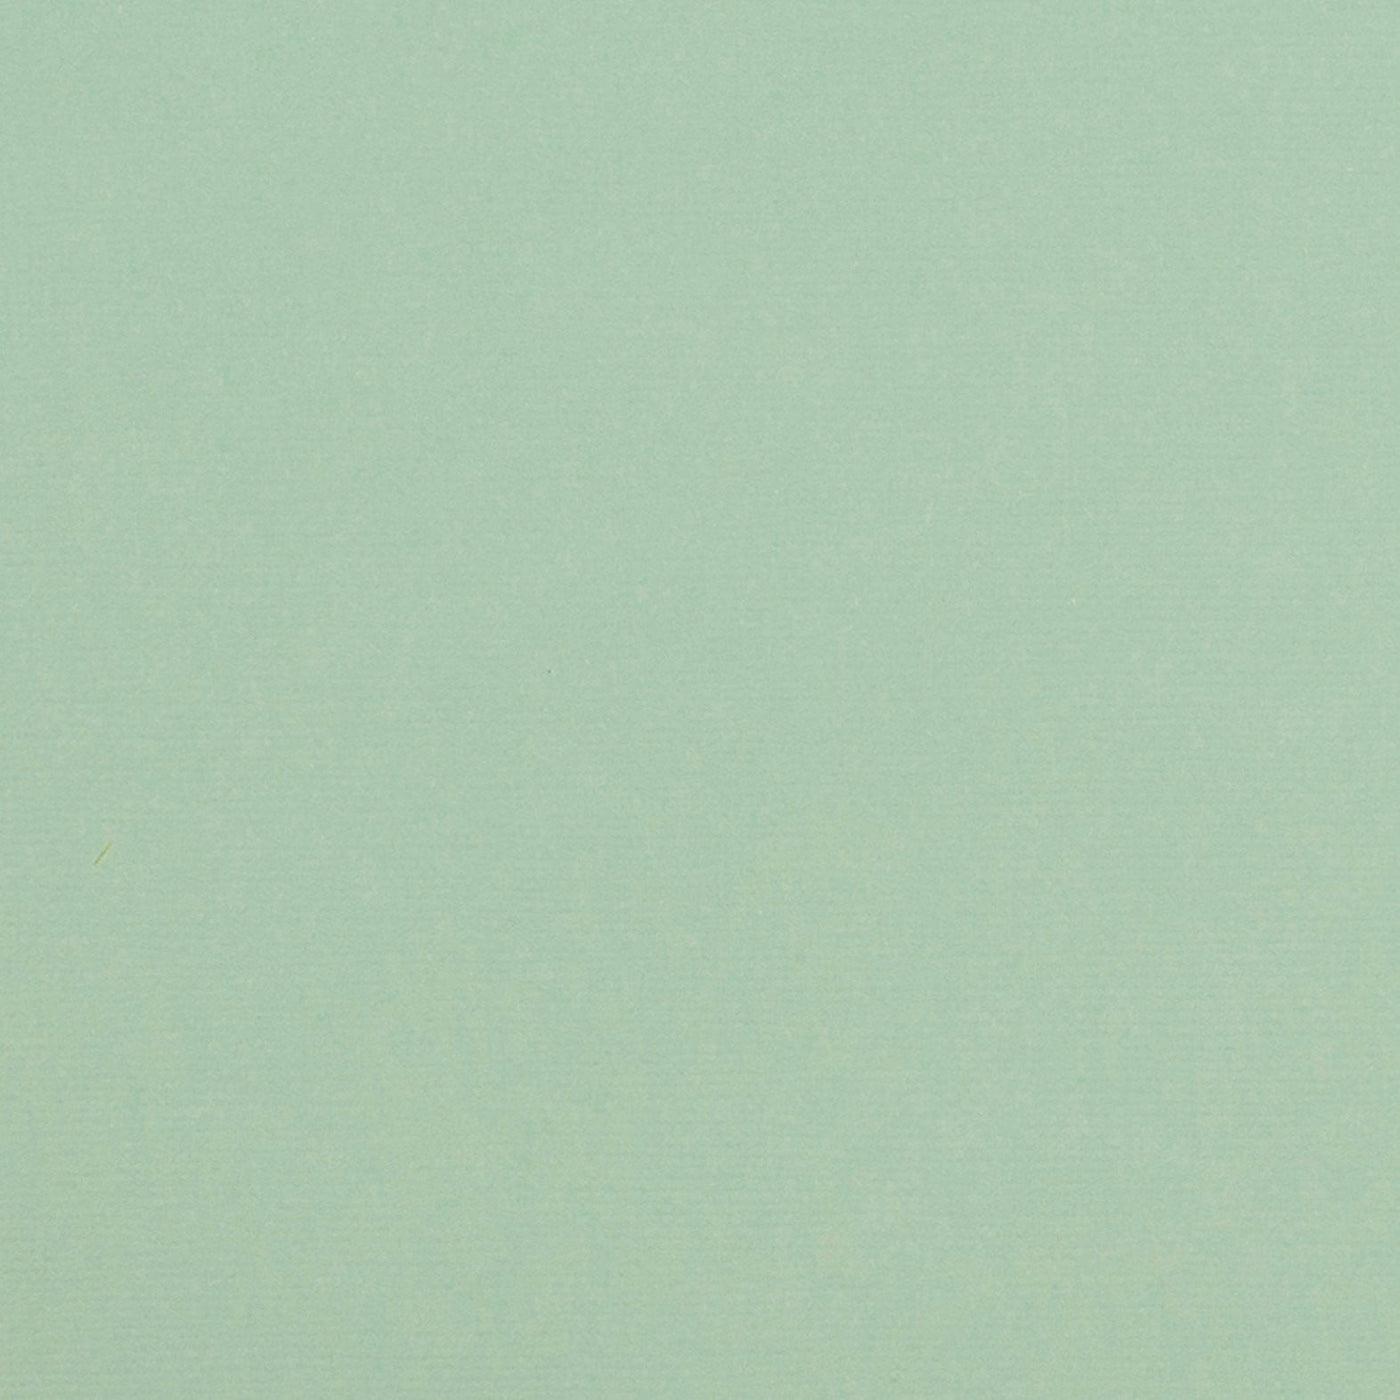 GEYSER seafoam green cardstock - 12x12 inch - 80 lb - textured scrapbook paper - American Crafts